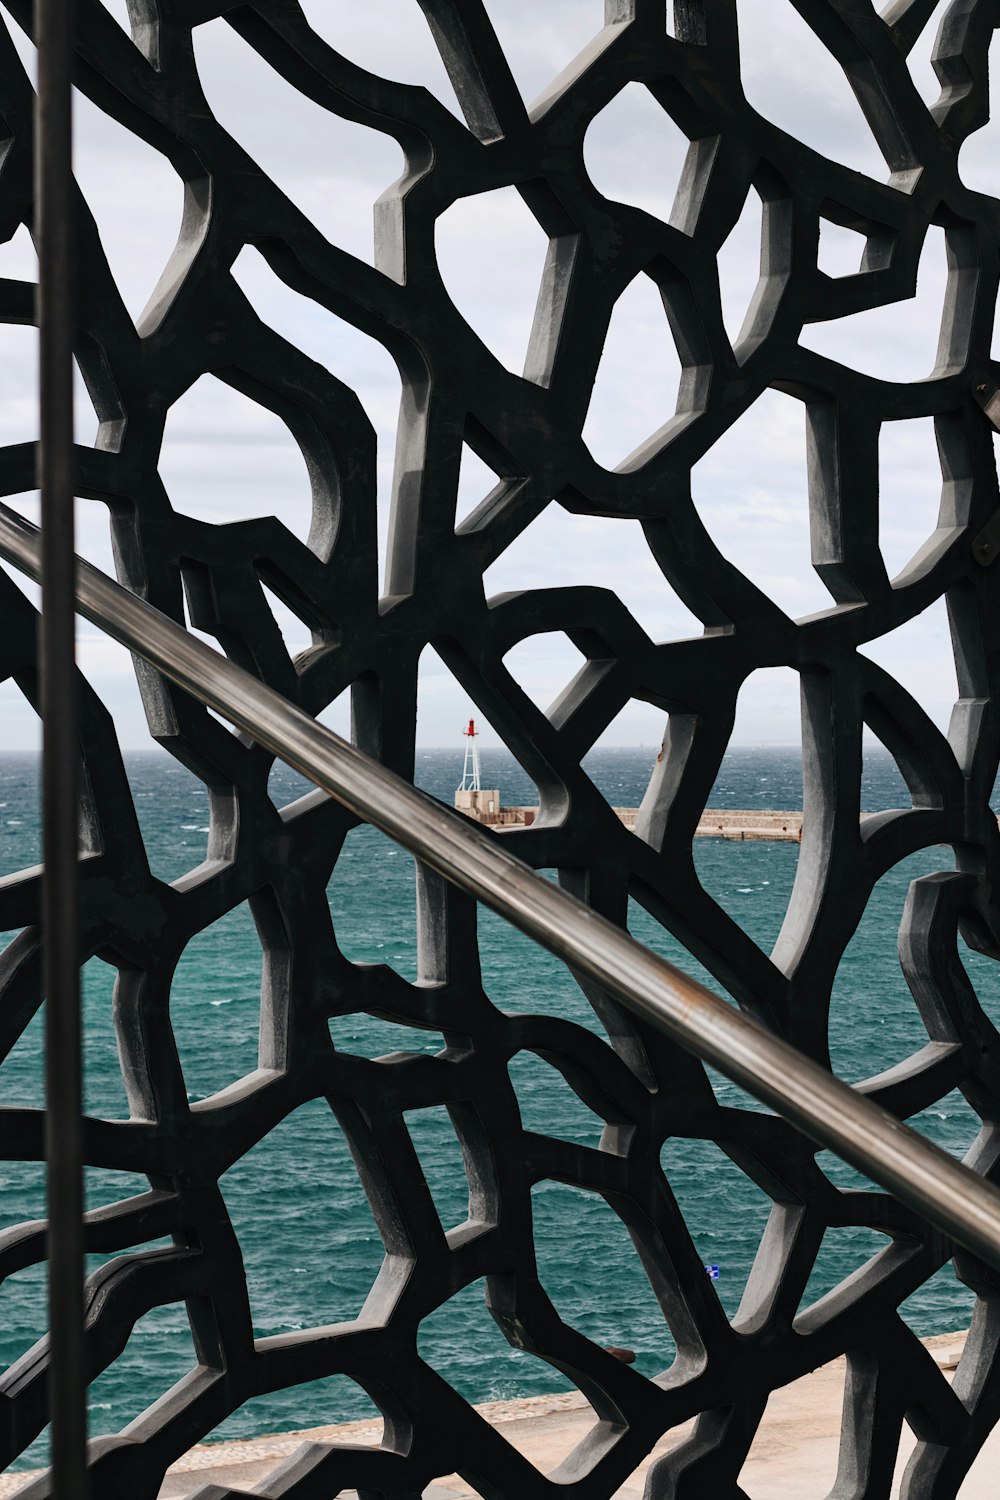 a view of the ocean through a metal sculpture